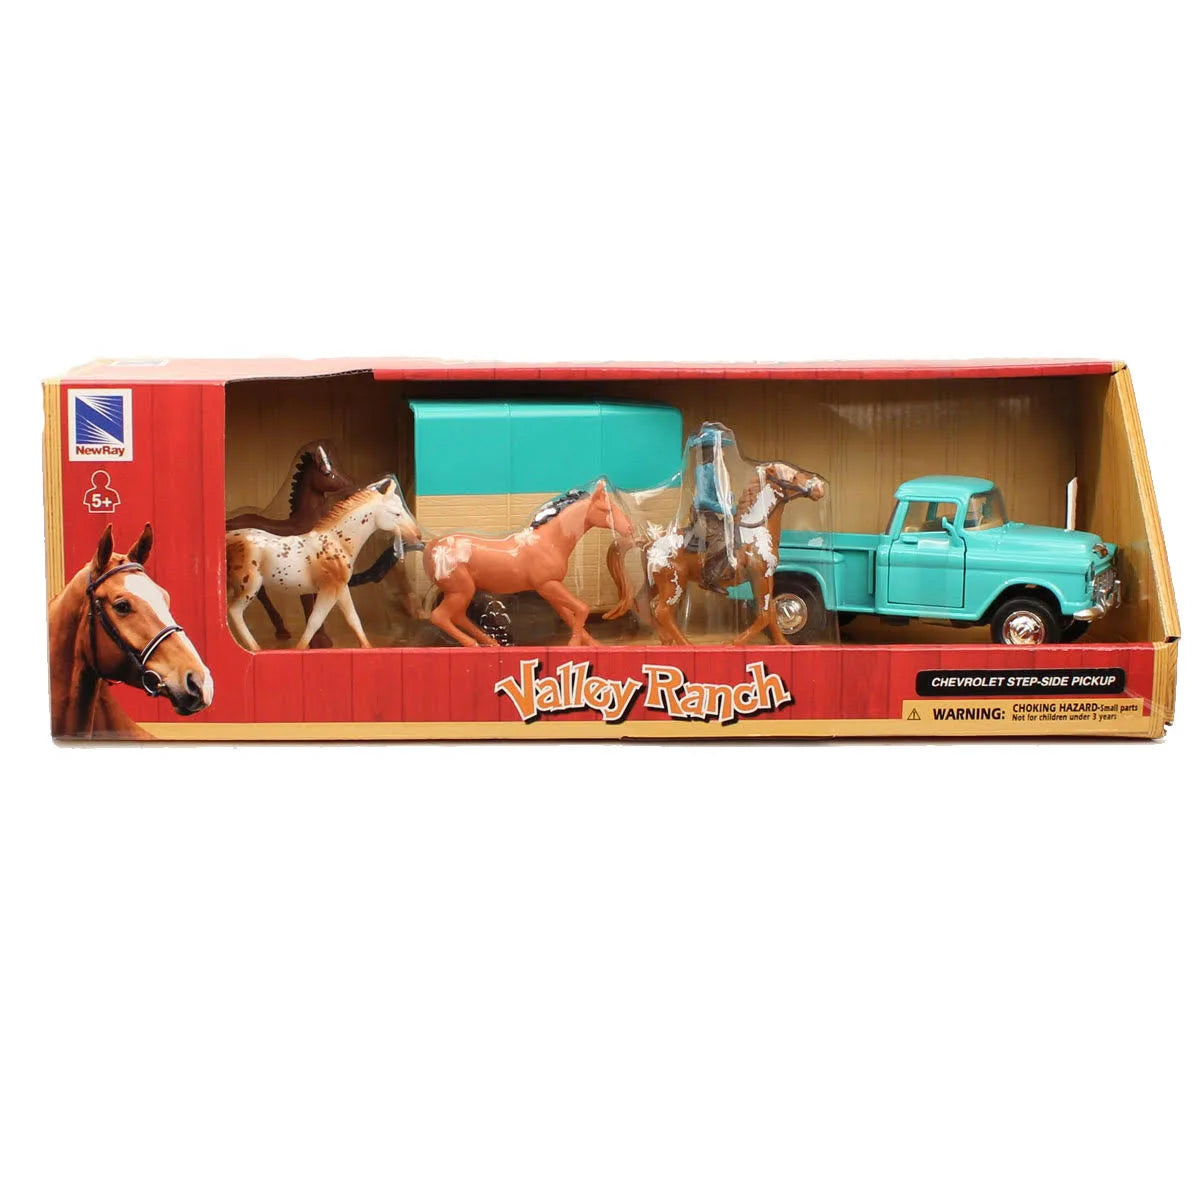 M&F Valley Ranch Truck Trailer Toy